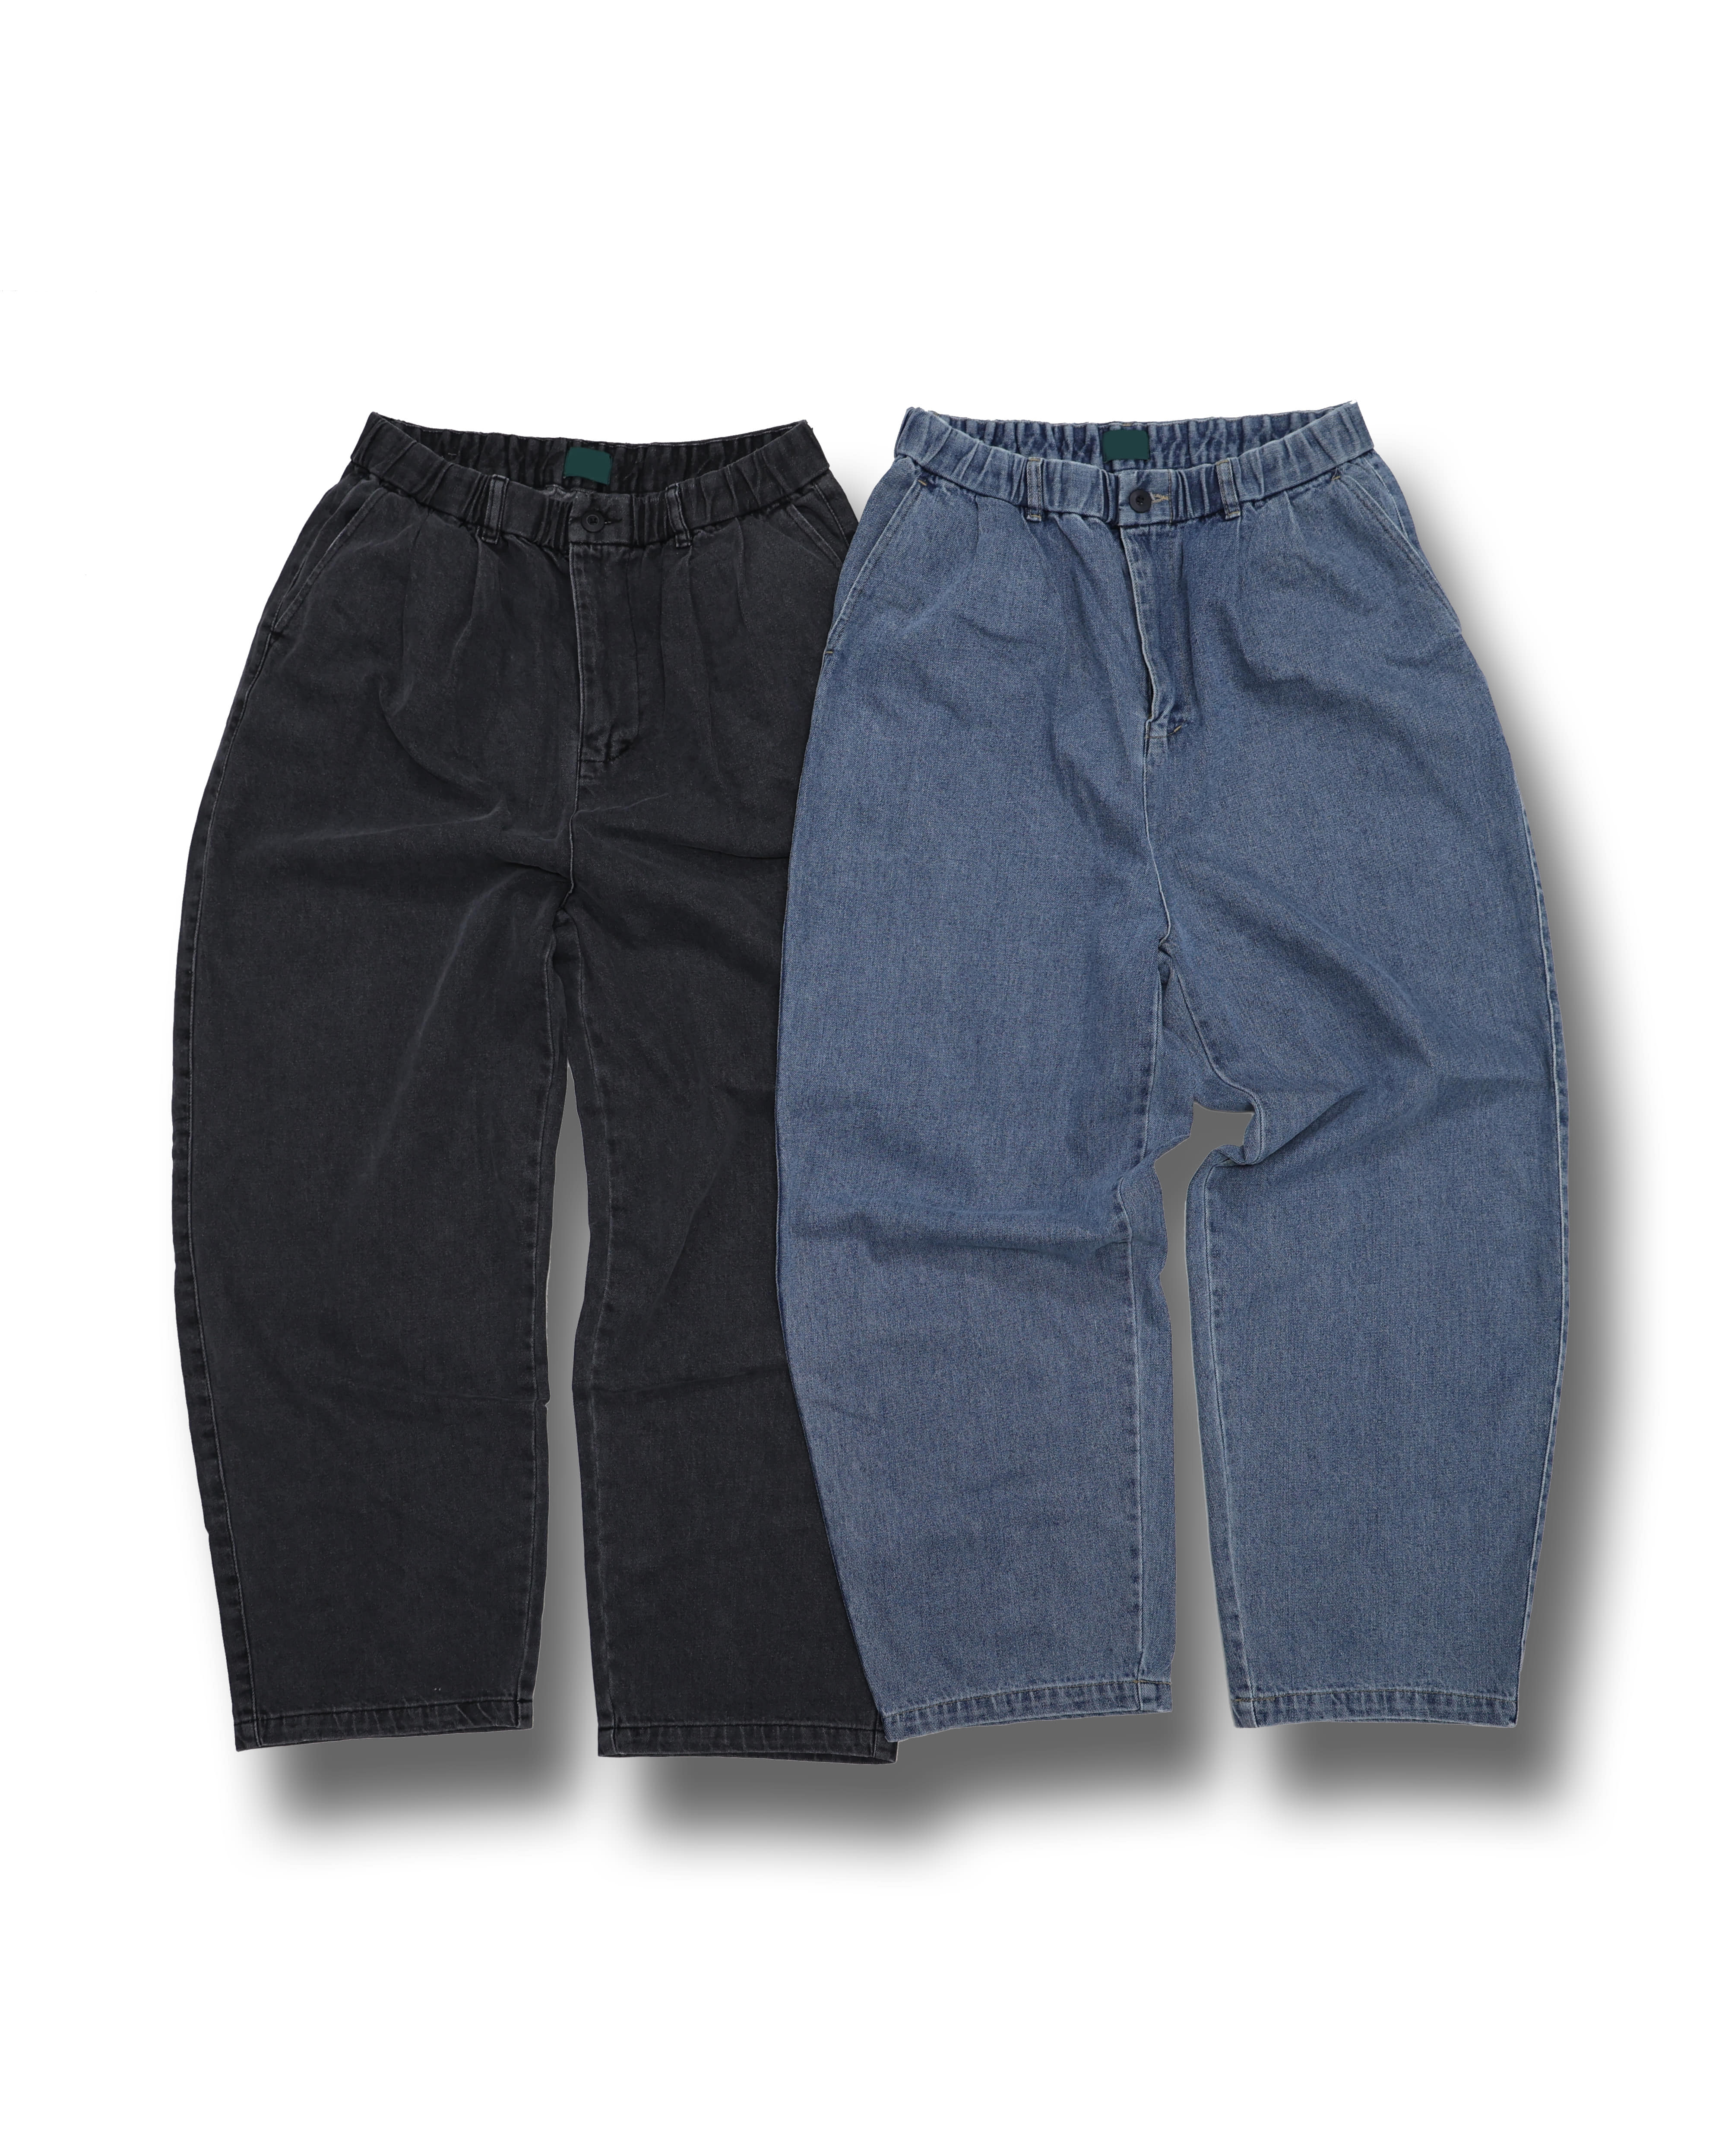 Gooto Flow Loose Fit Denim Pants (Black Denim/Blue Denim)